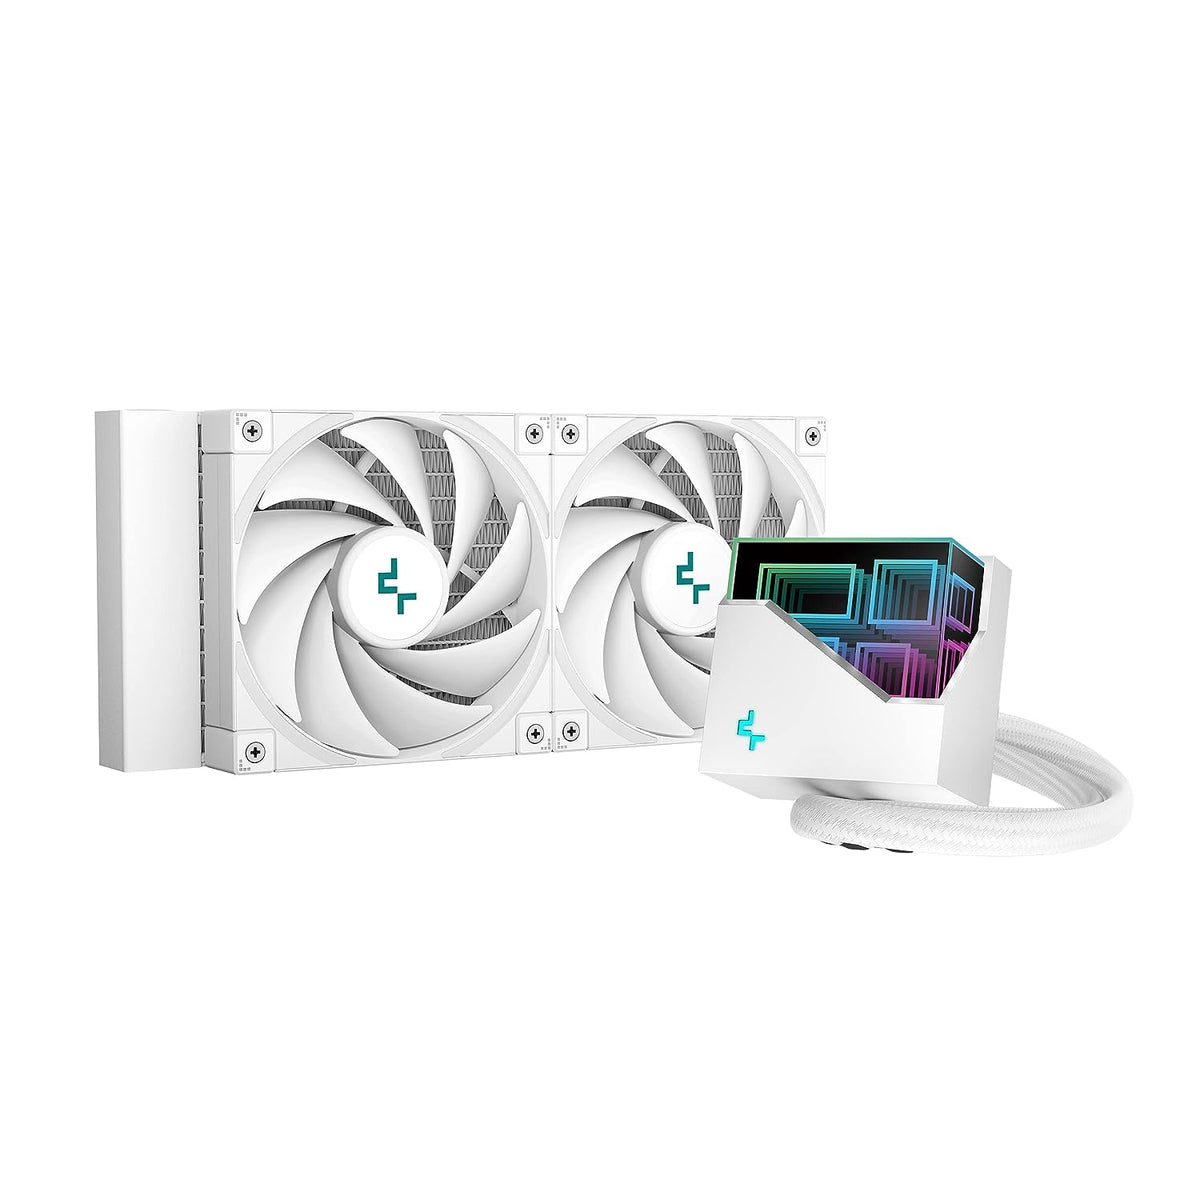 Deepcool LT520 Infinity Mirror 240mm AIO White